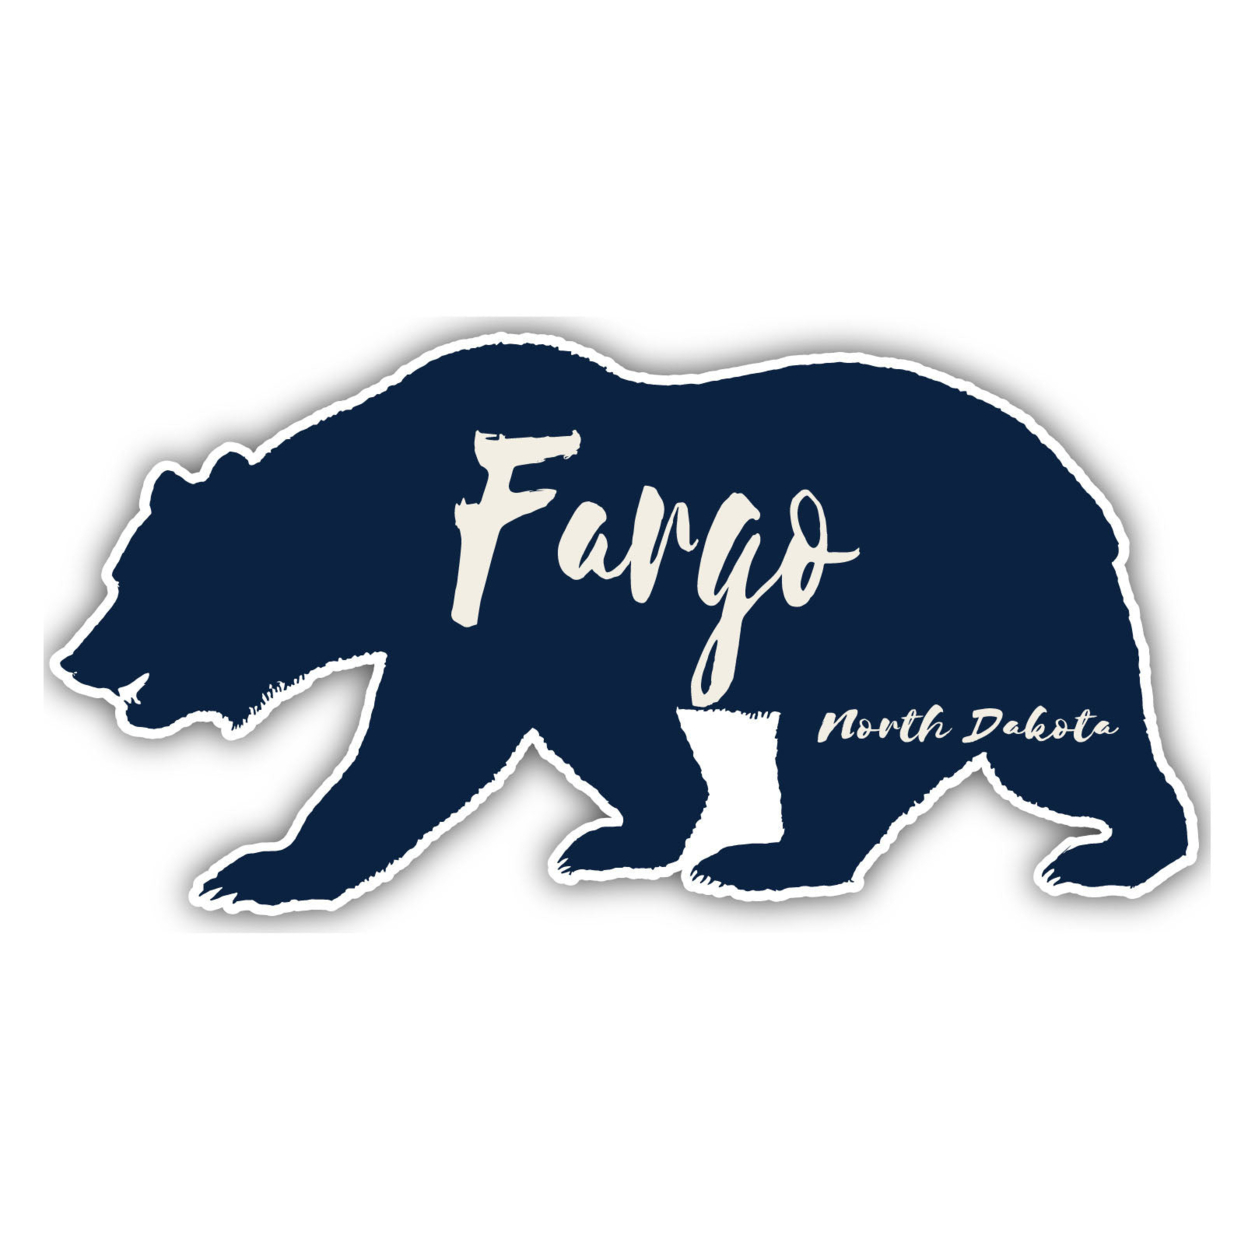 Fargo North Dakota Souvenir Decorative Stickers (Choose Theme And Size) - Single Unit, 4-Inch, Adventures Awaits